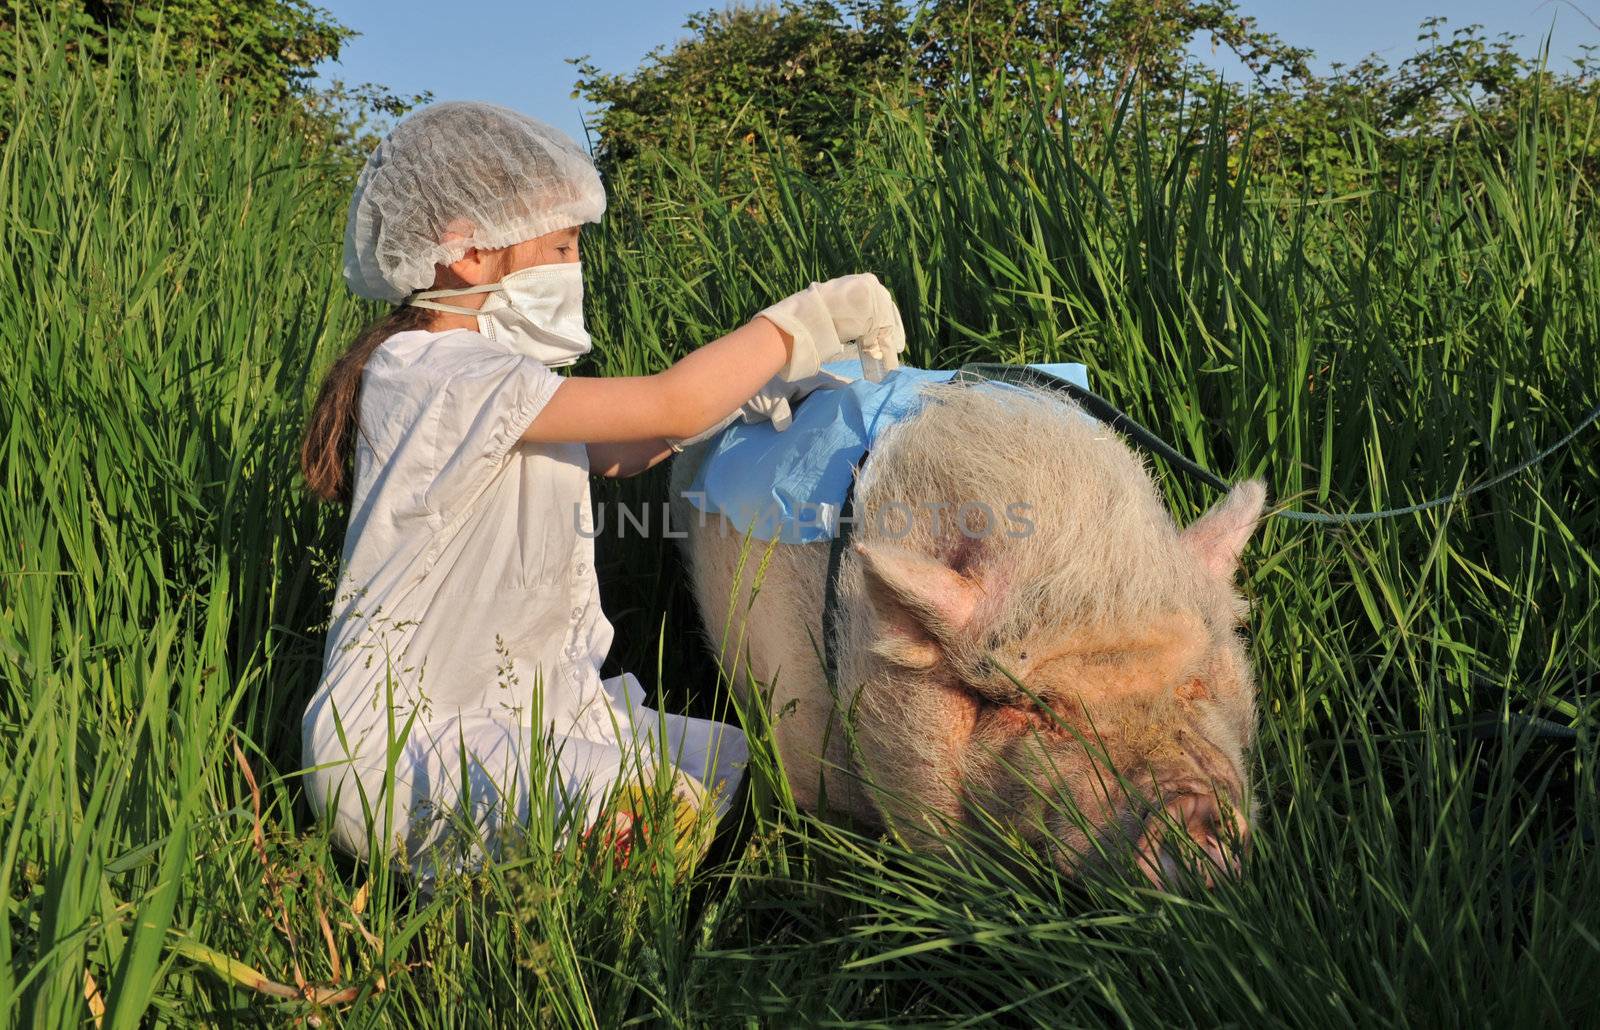 Swine Influenza Flu by cynoclub